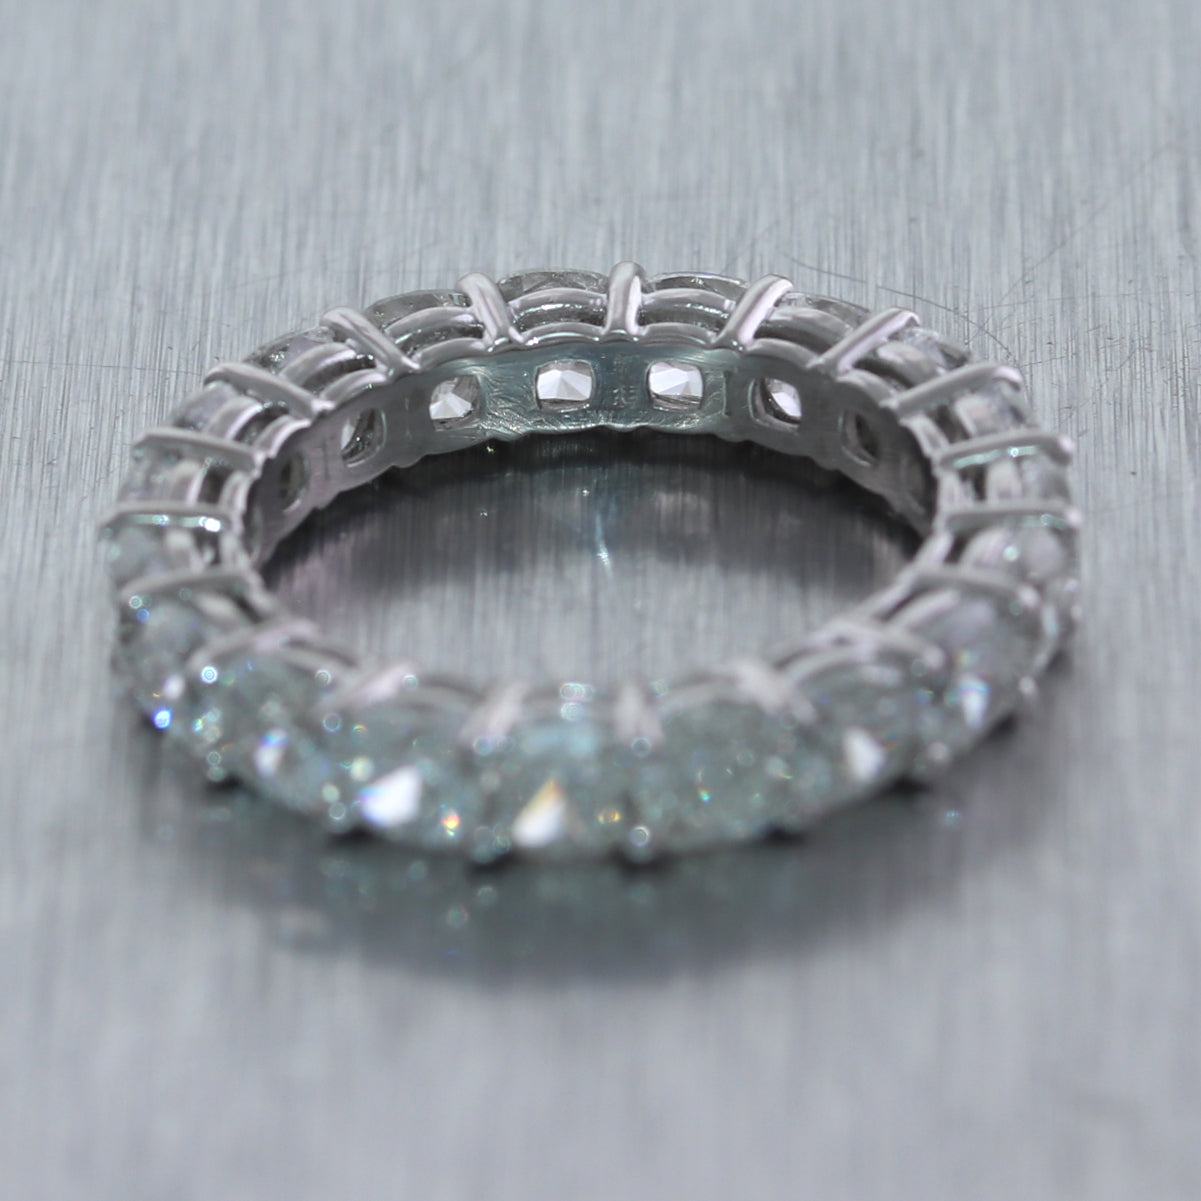 GIA Platinum 5.70ctw Cushion Cut Diamond Eternity Wedding Band Ring